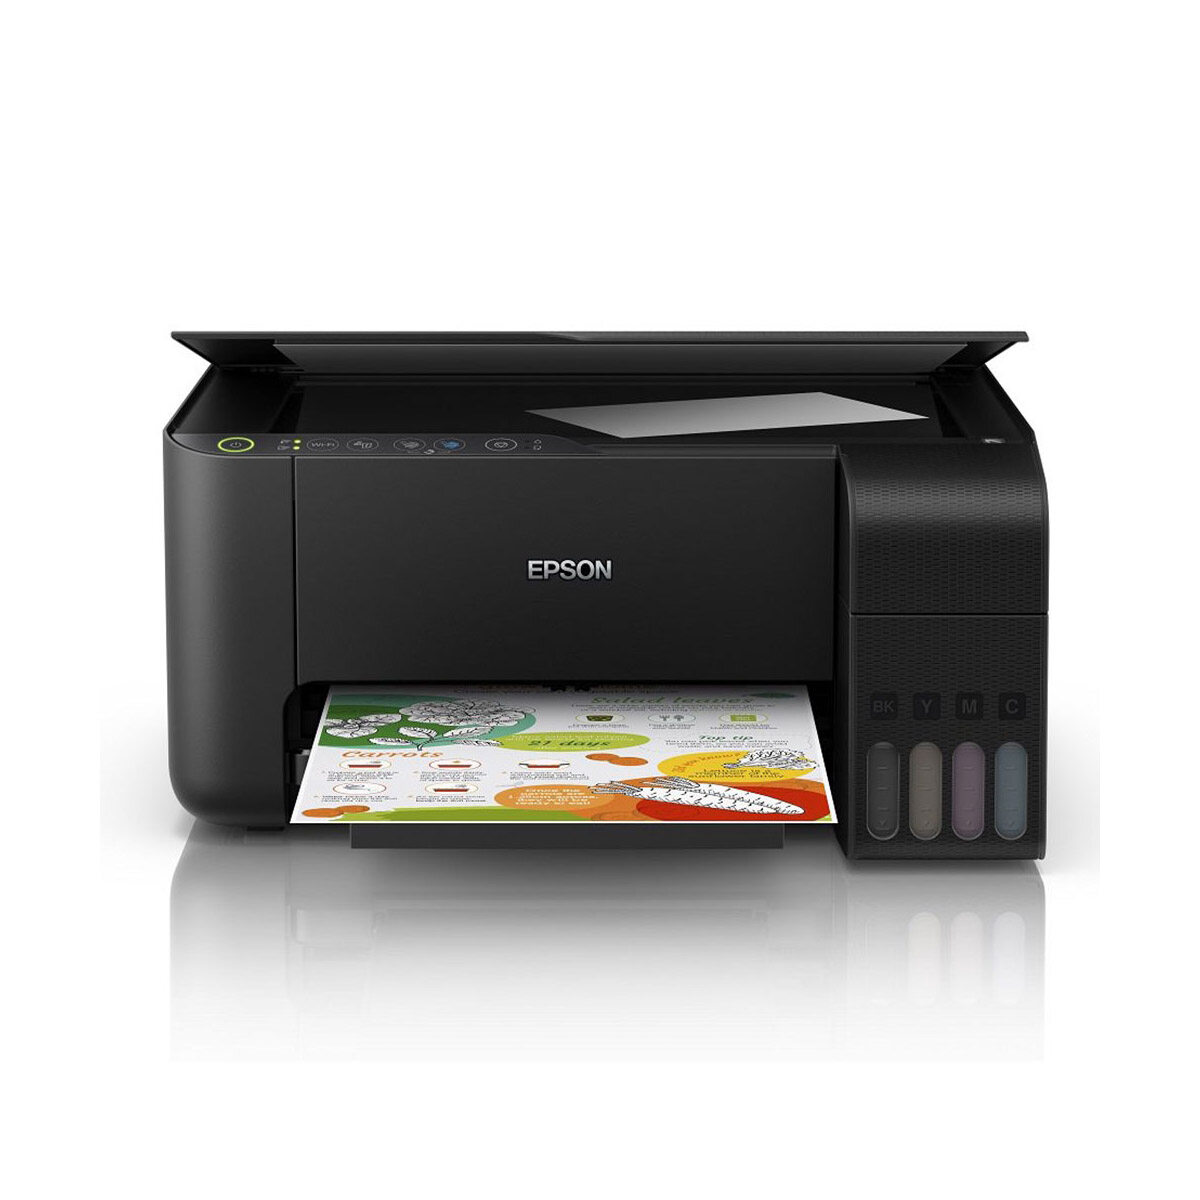 Epson EcoTank L3250 / L3150 All-in-One Ink Tank Colour (Print/Scan/Copy/Wi-Fi) Wireless Printer